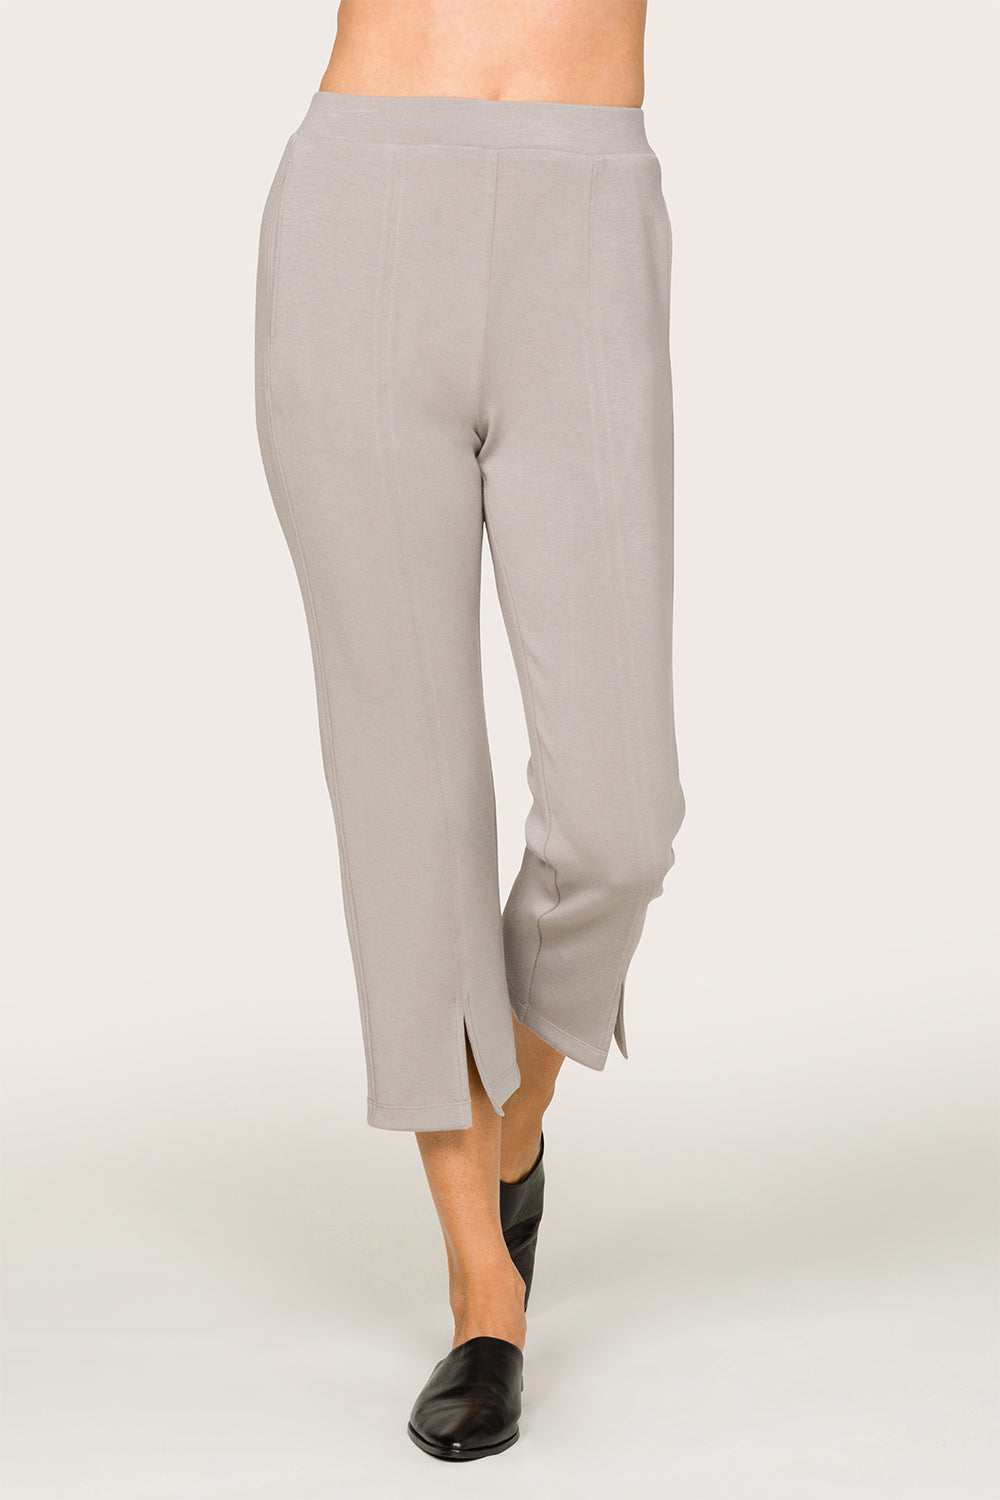 Alala women's soft crop pant in grey